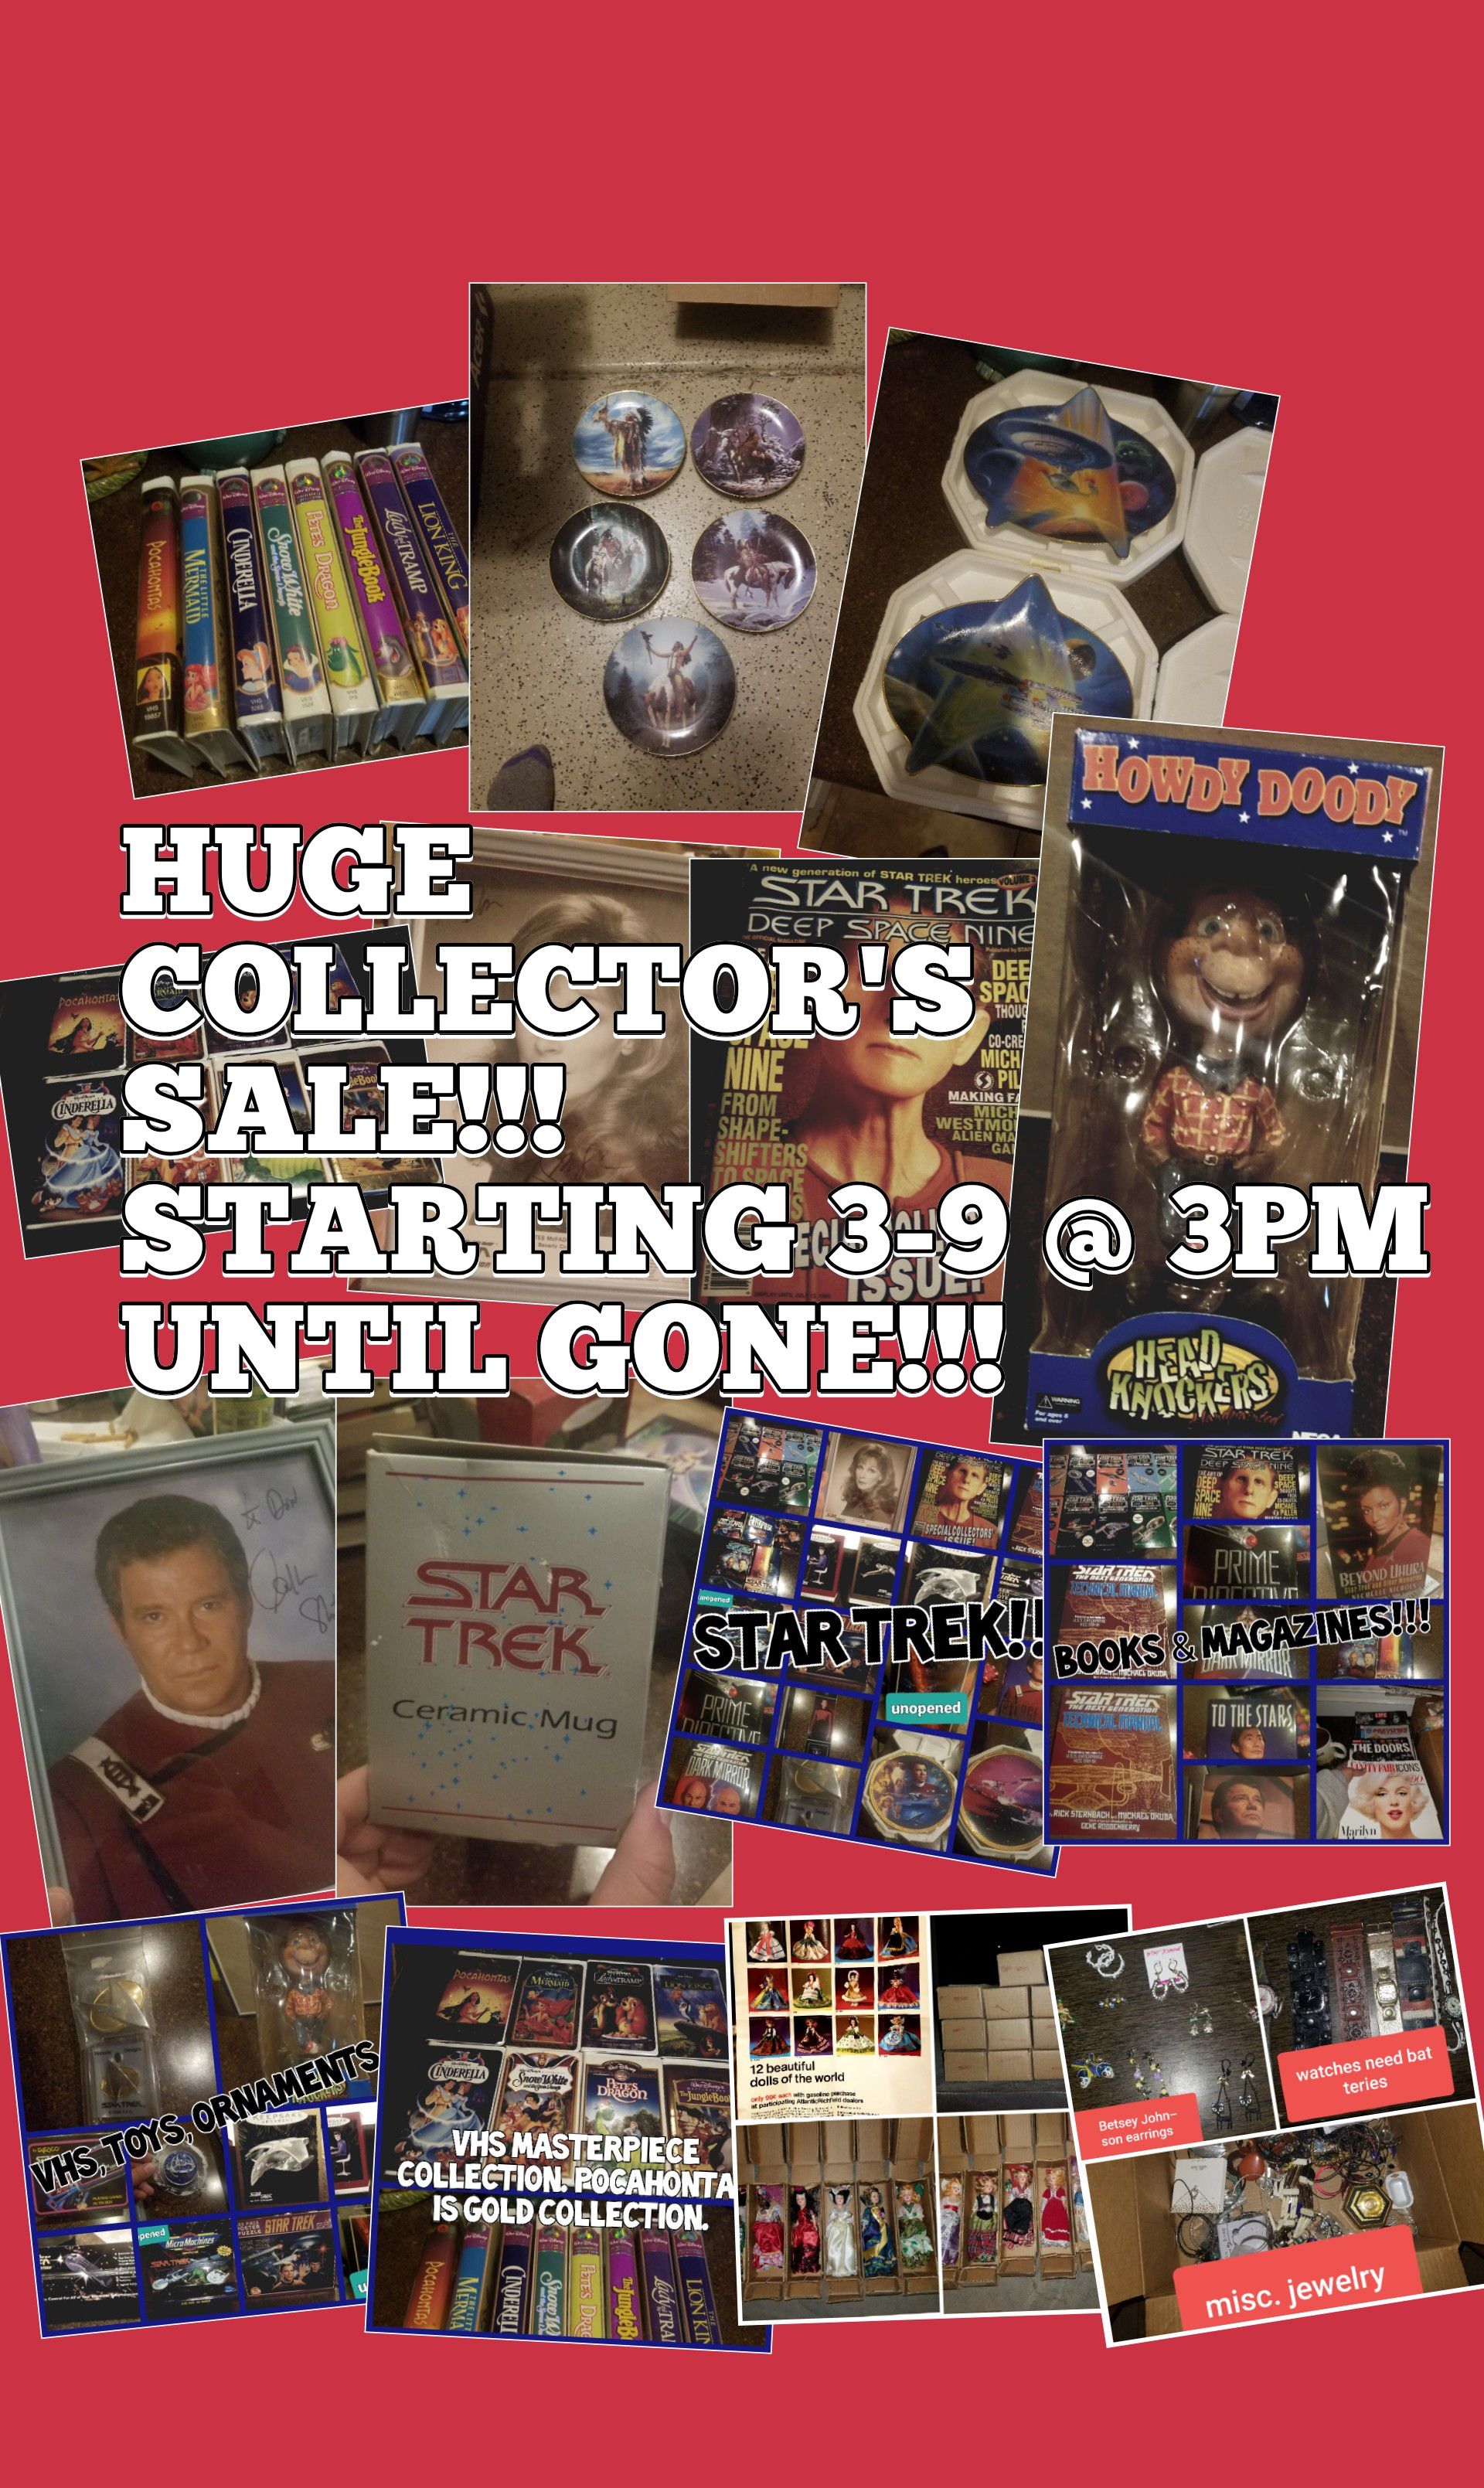 HUGE Collector's sale!!! Please read description below for details.